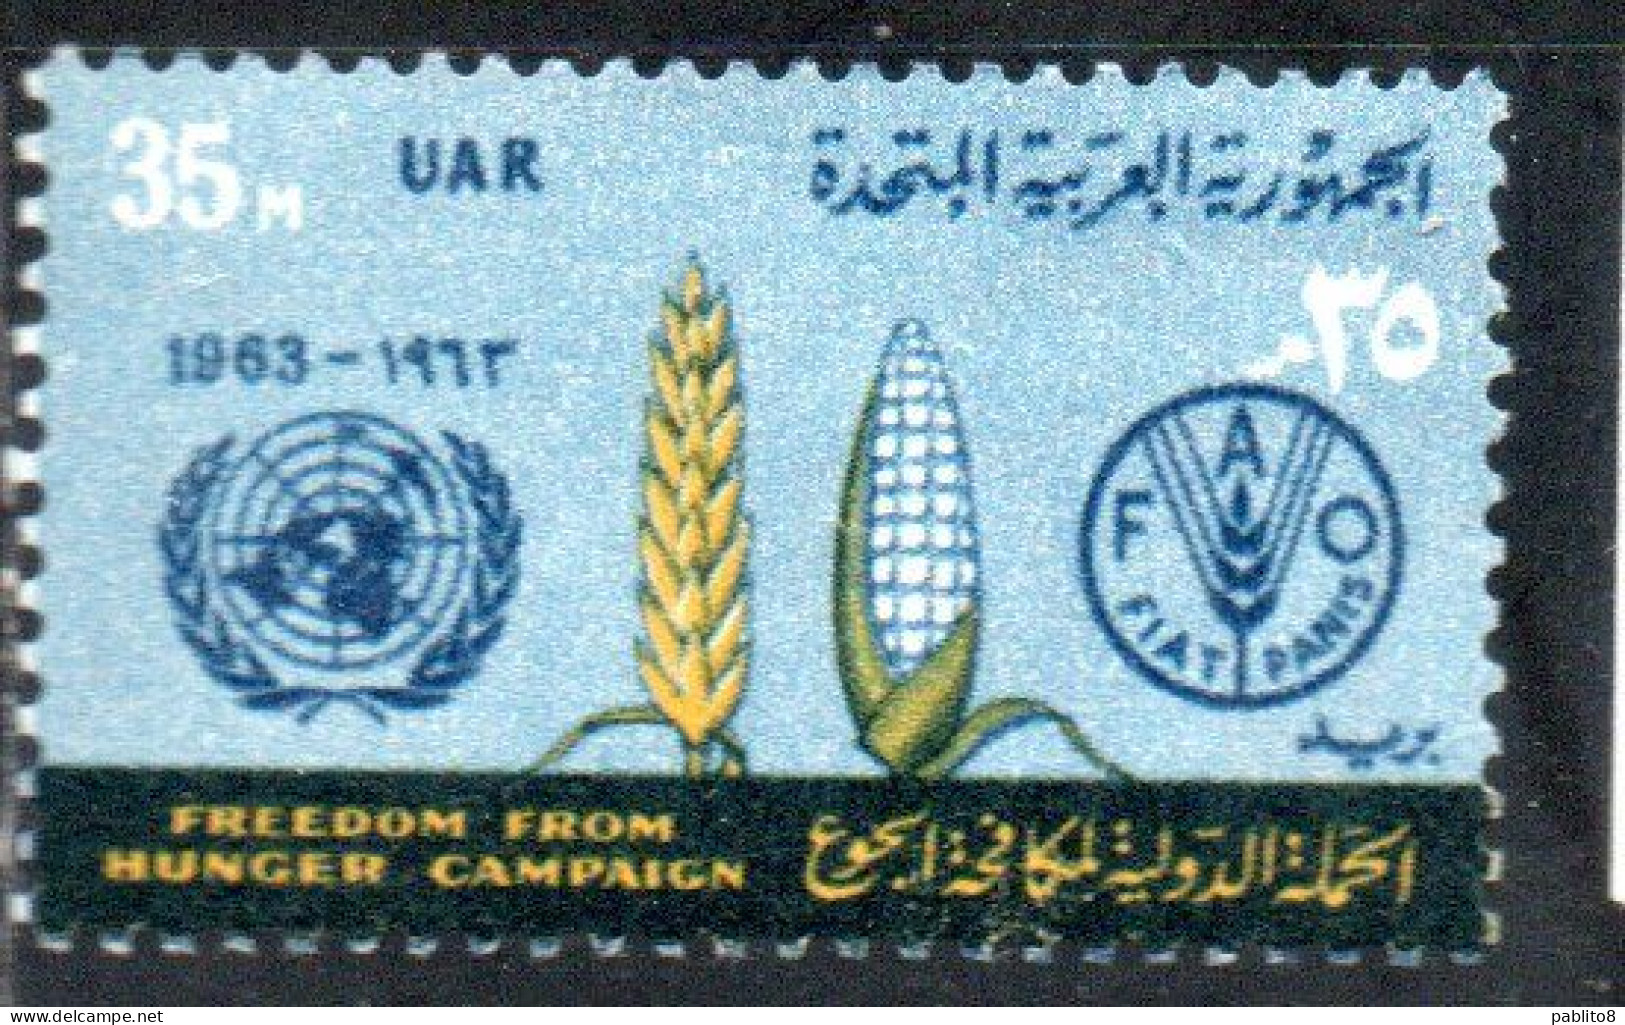 UAR EGYPT EGITTO 1963 FAO FREEDOM FROM HUNGER CAMPAIGN WHEAT CORN AND EMBLEMS 35m  MNH - Nuovi